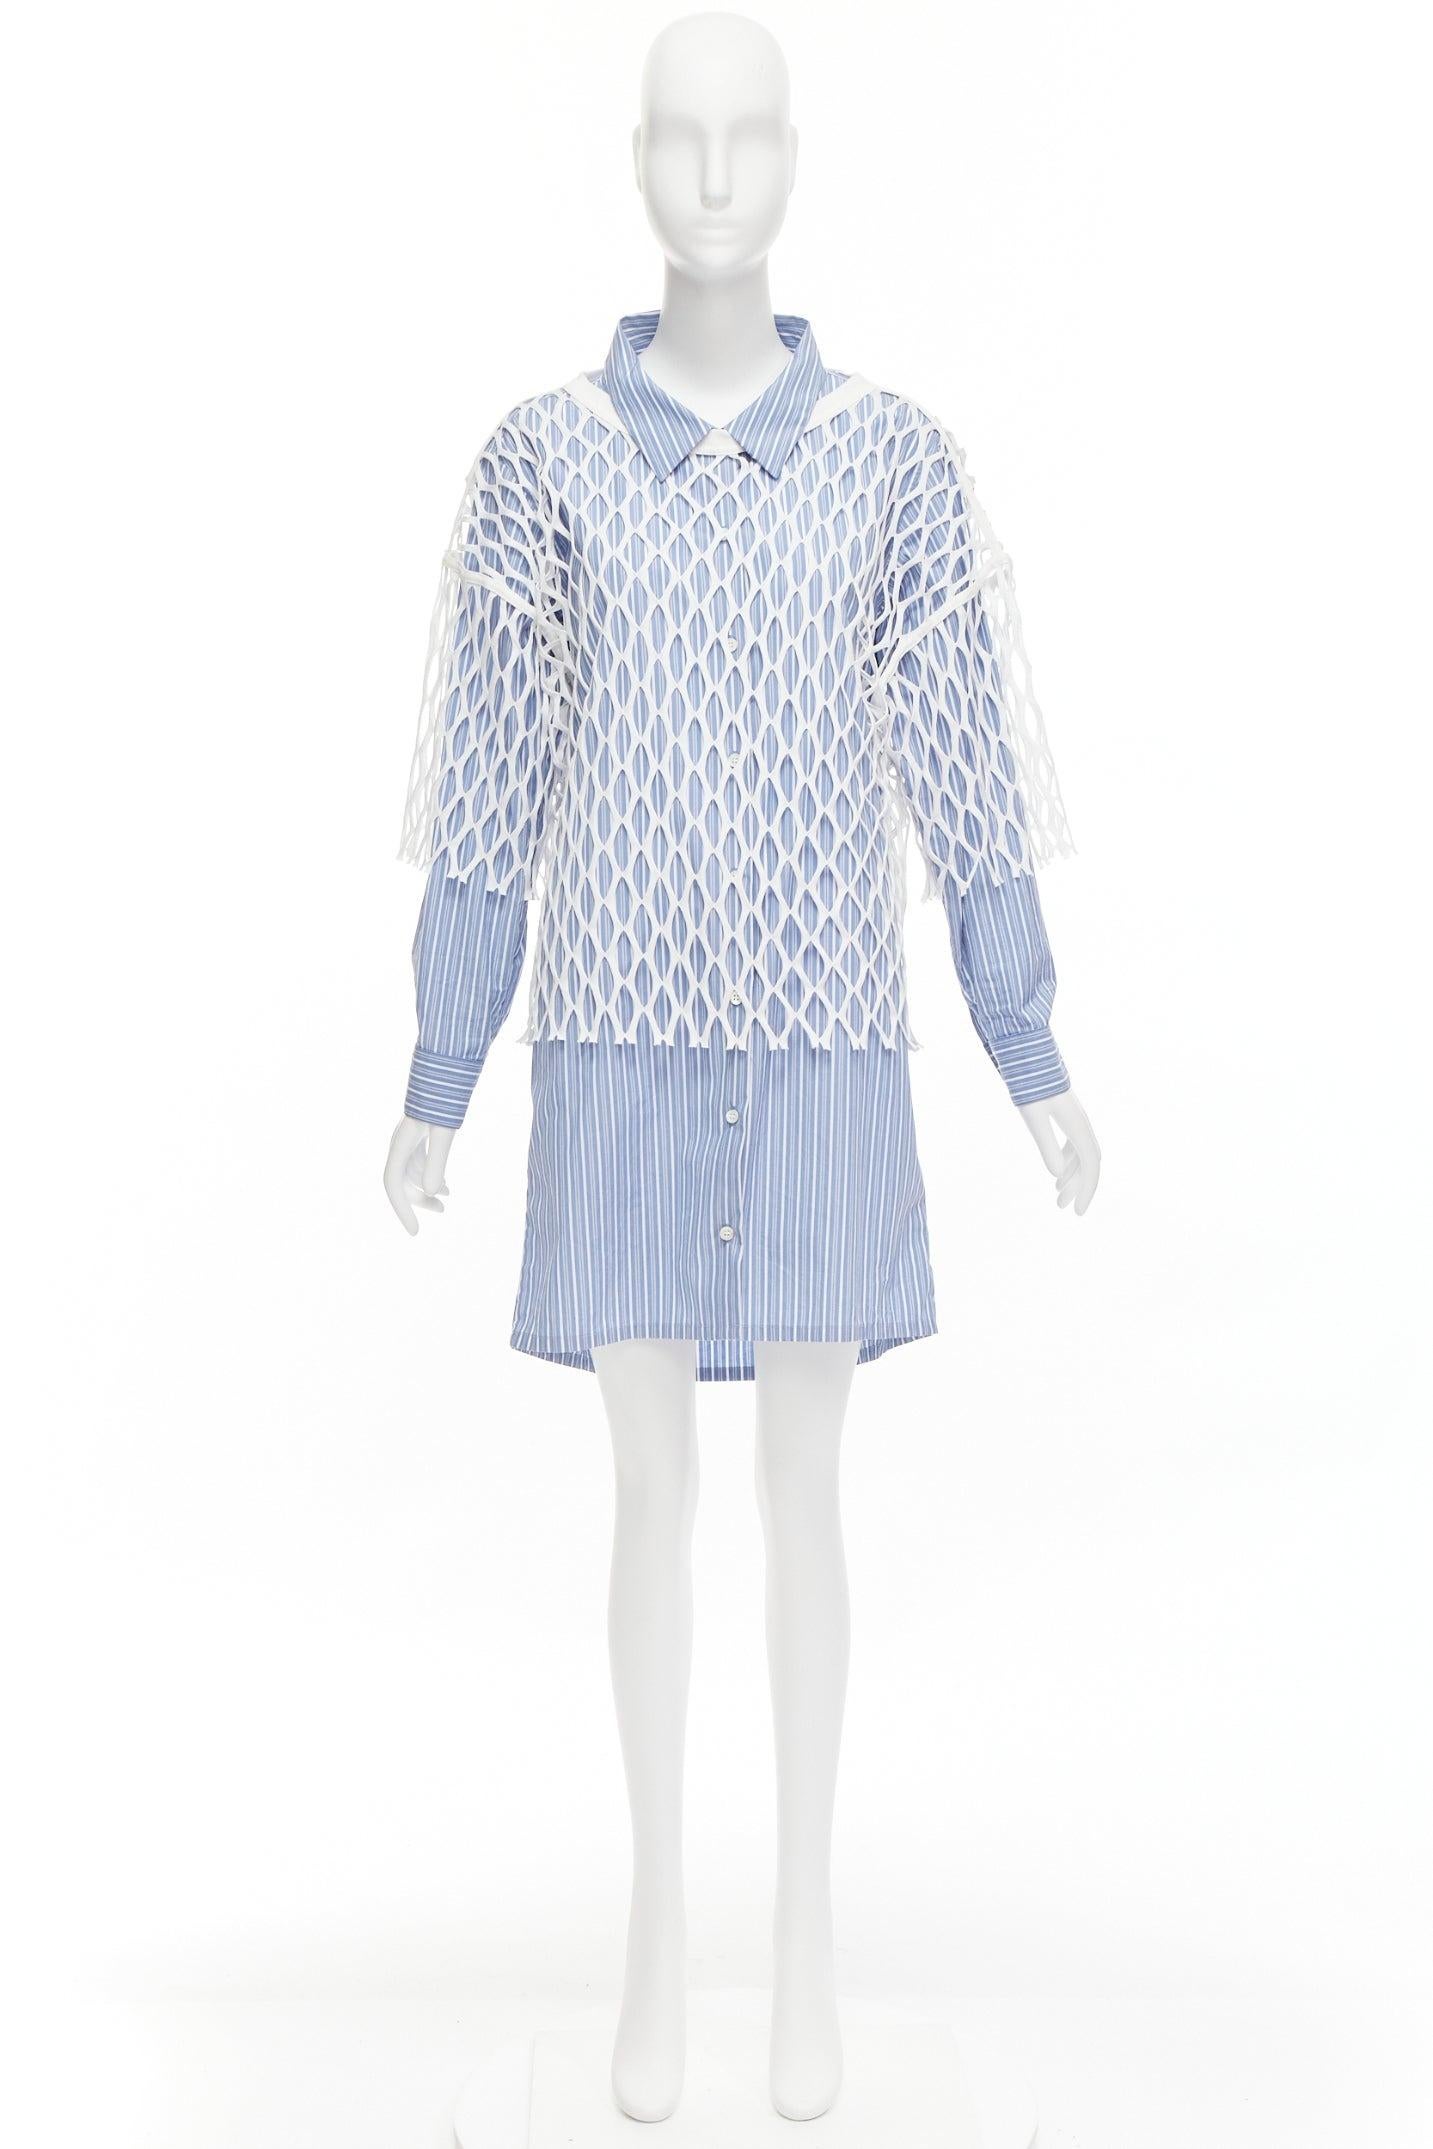 DRIES VAN NOTEN white blue cotton fishnet overlay shirt dress FR34 XS 4